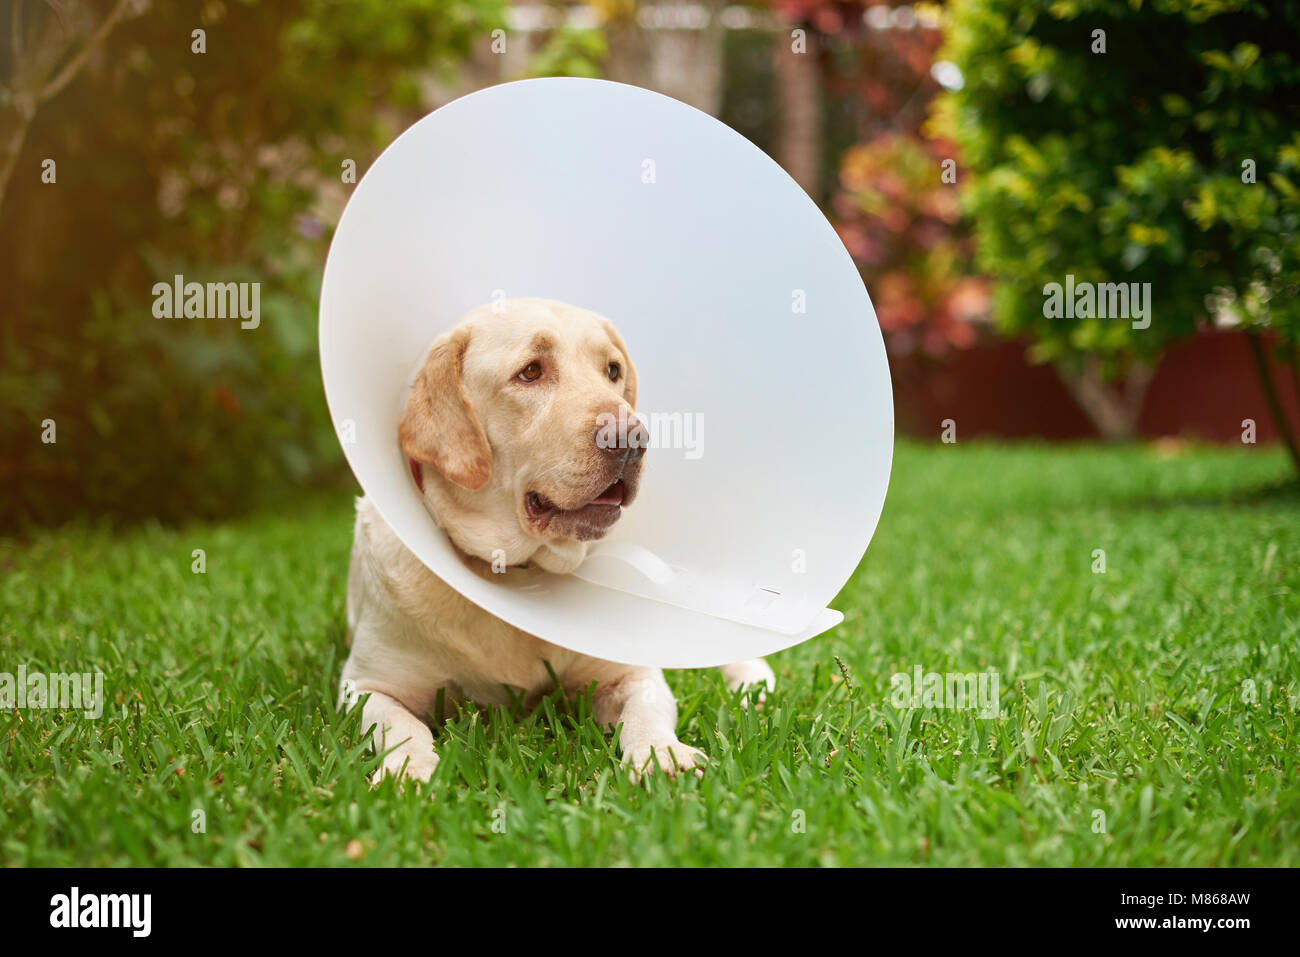 Sad labrador dog with cone collar on neck Stock Photo